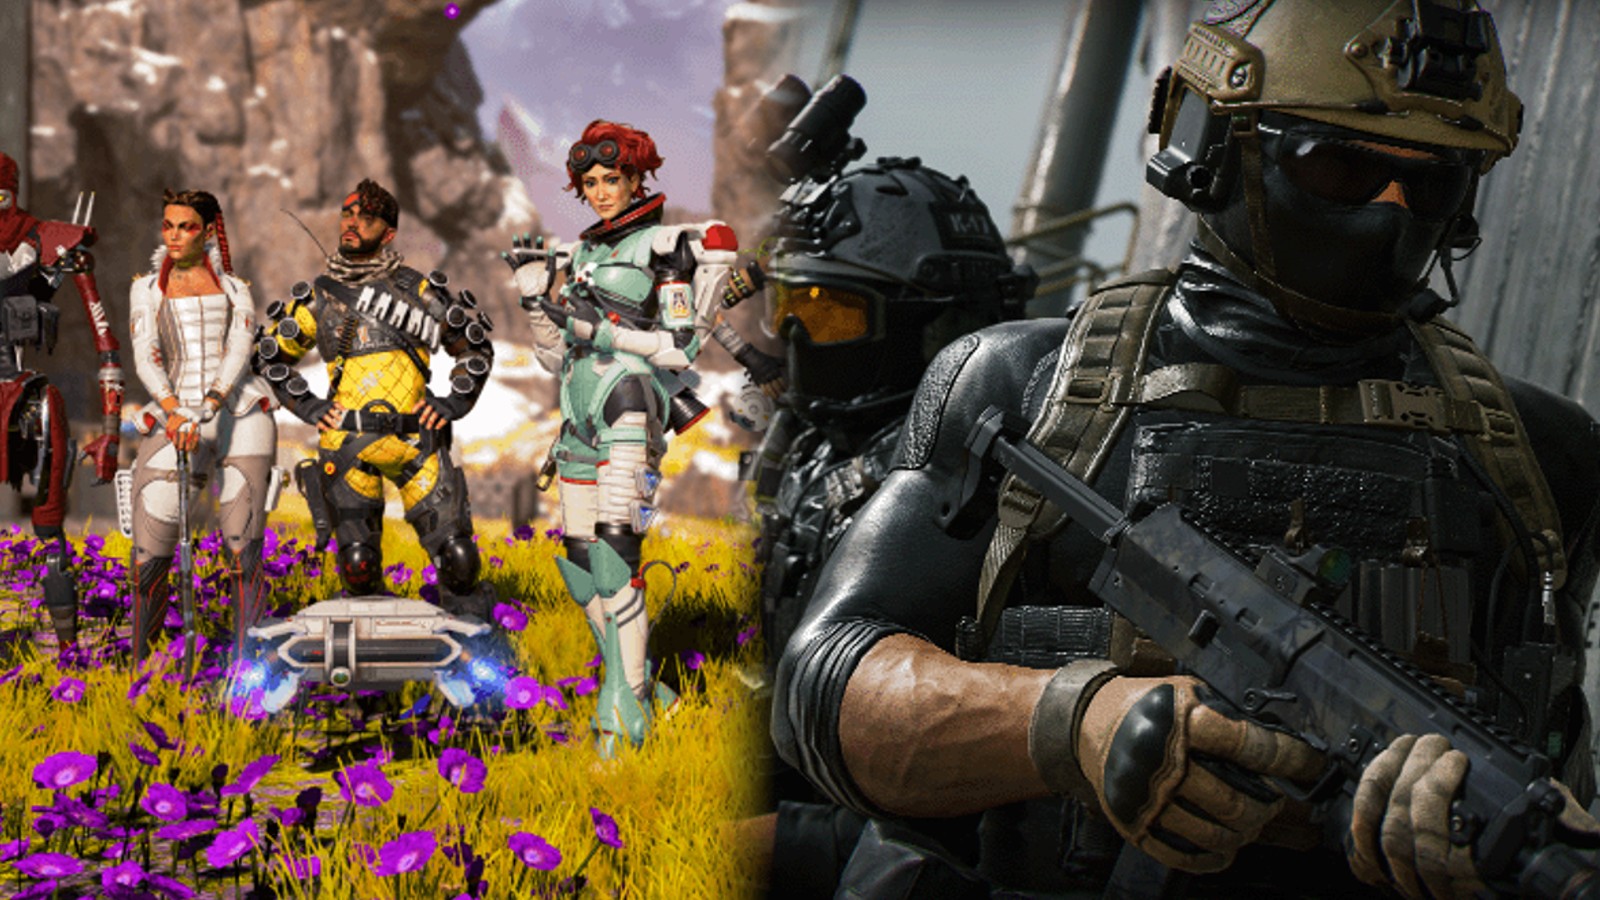 Apex Legends stats reveal Warzone 2 still hasn't overtaken "dead game"